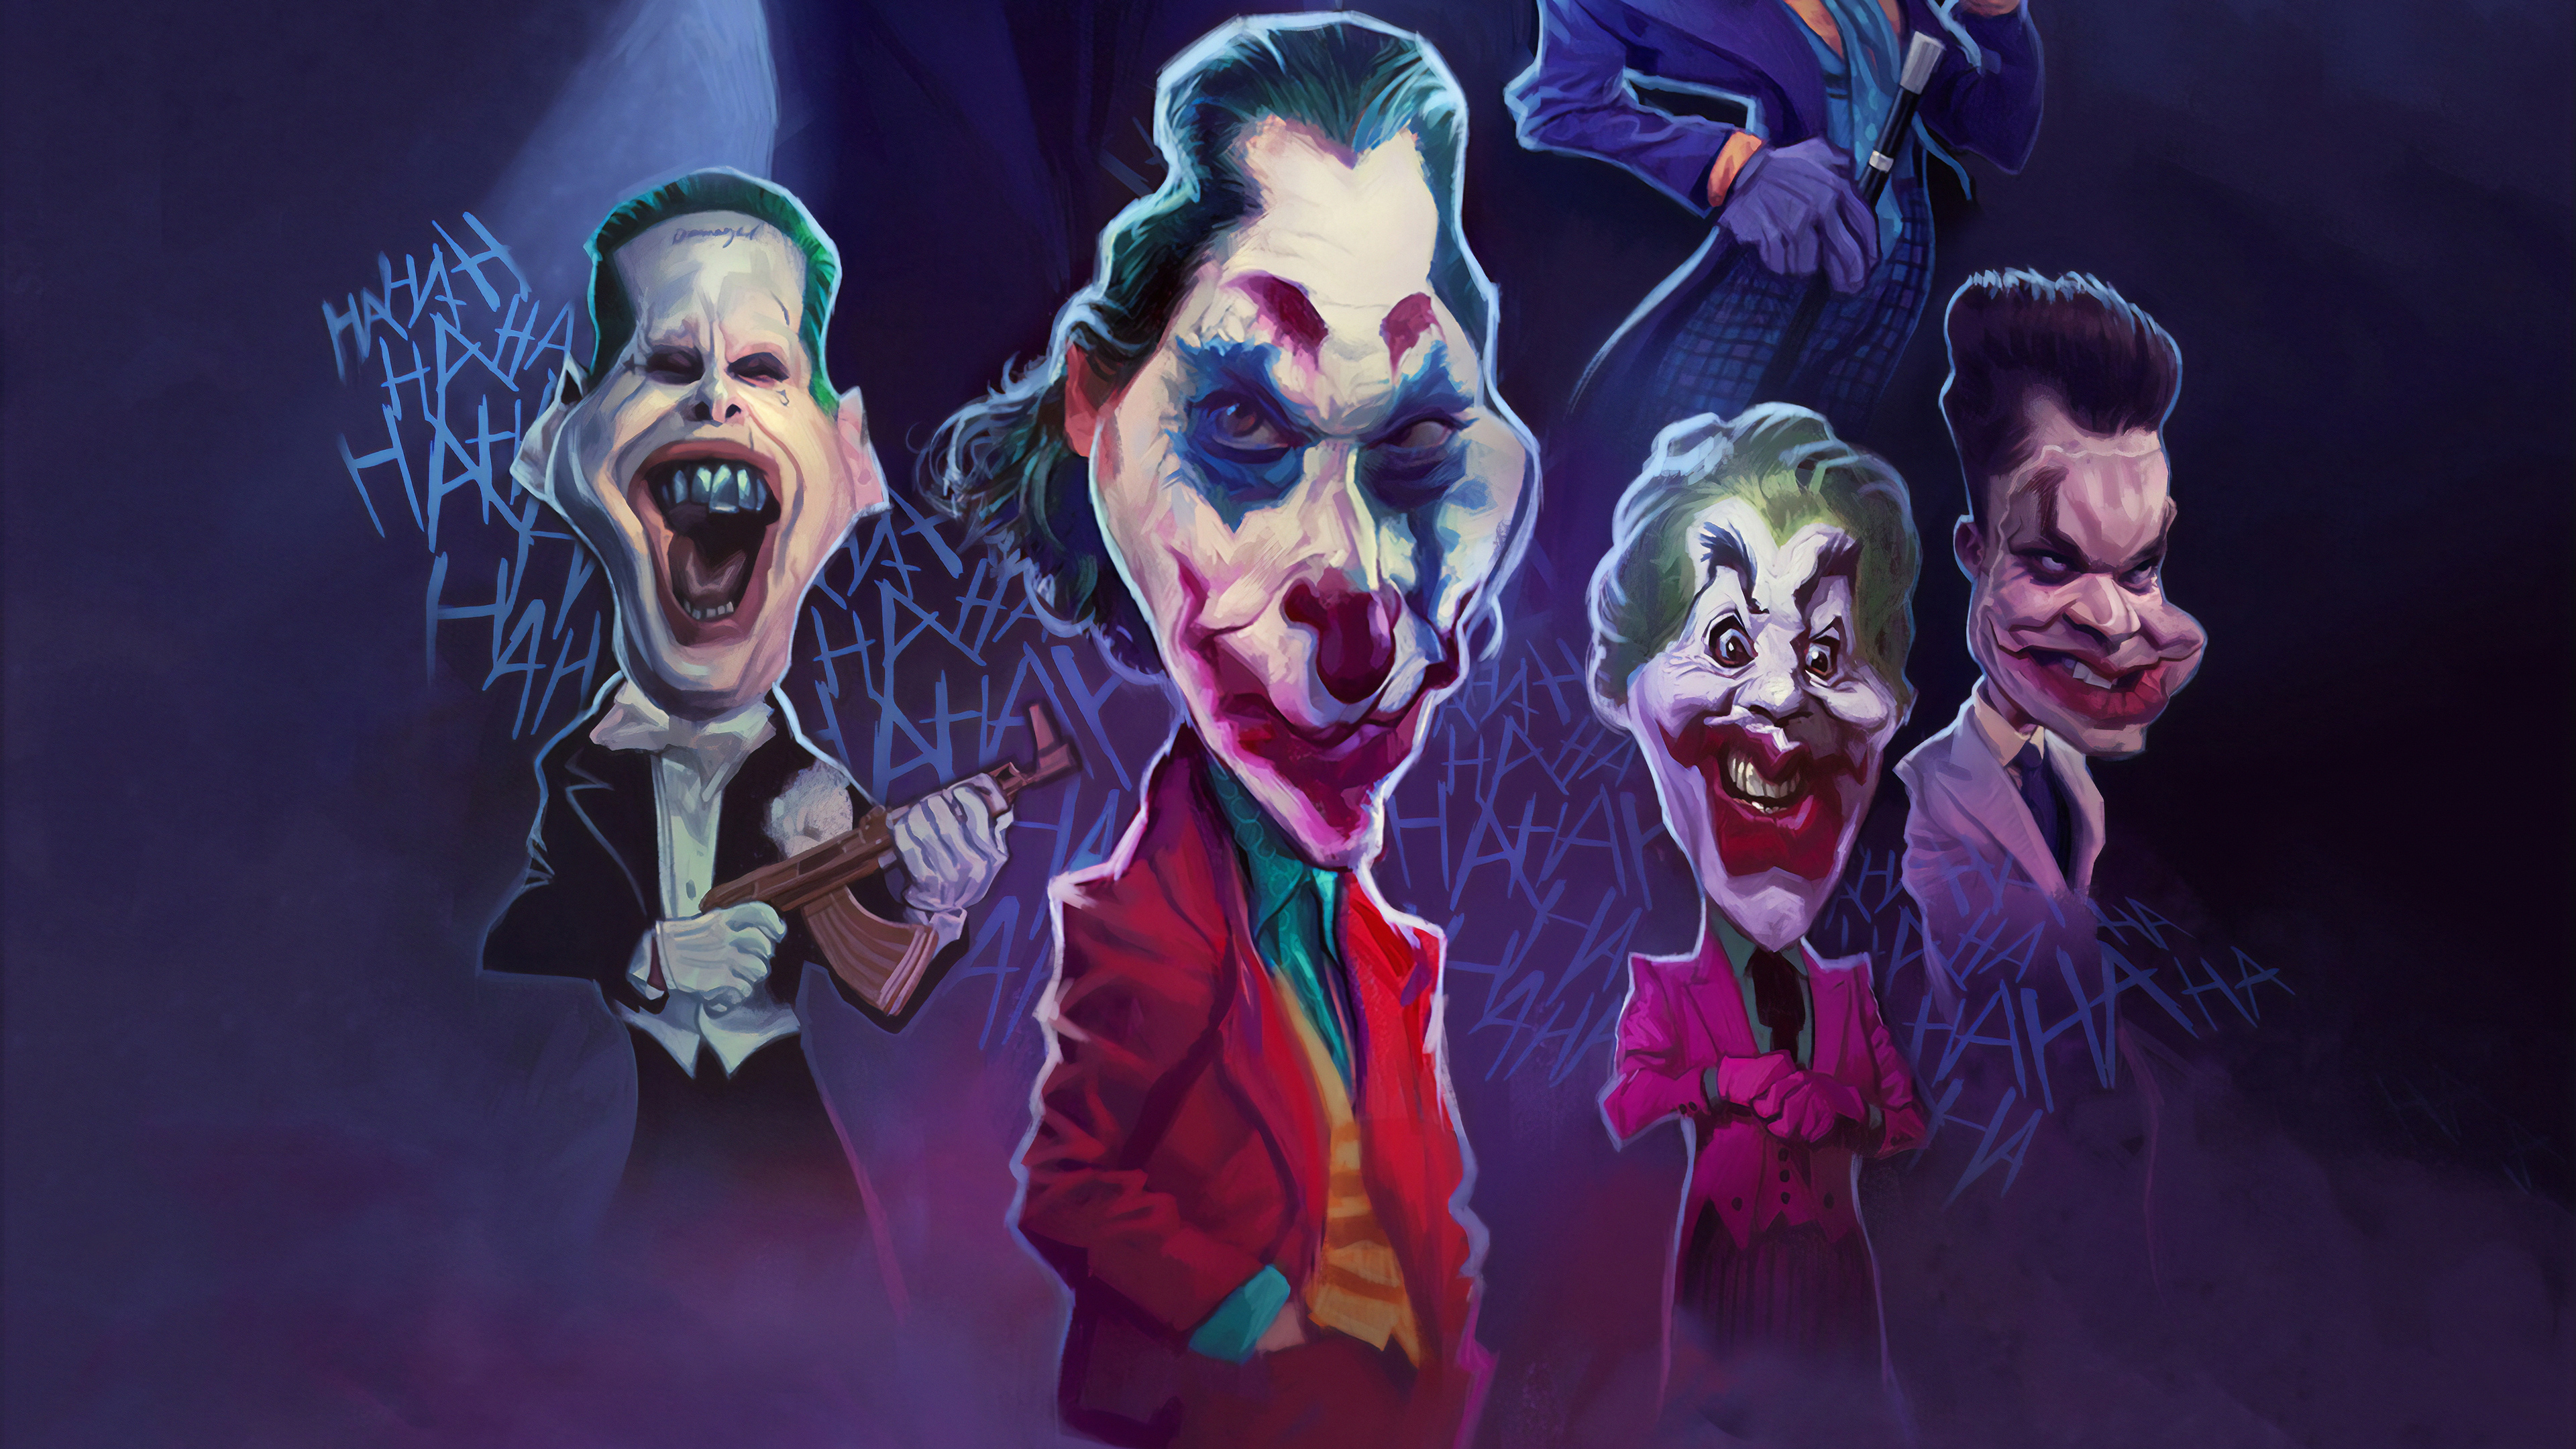 Joker Weird Face Art, HD Superheroes, 4k Wallpaper, Image, Background, Photo and Picture